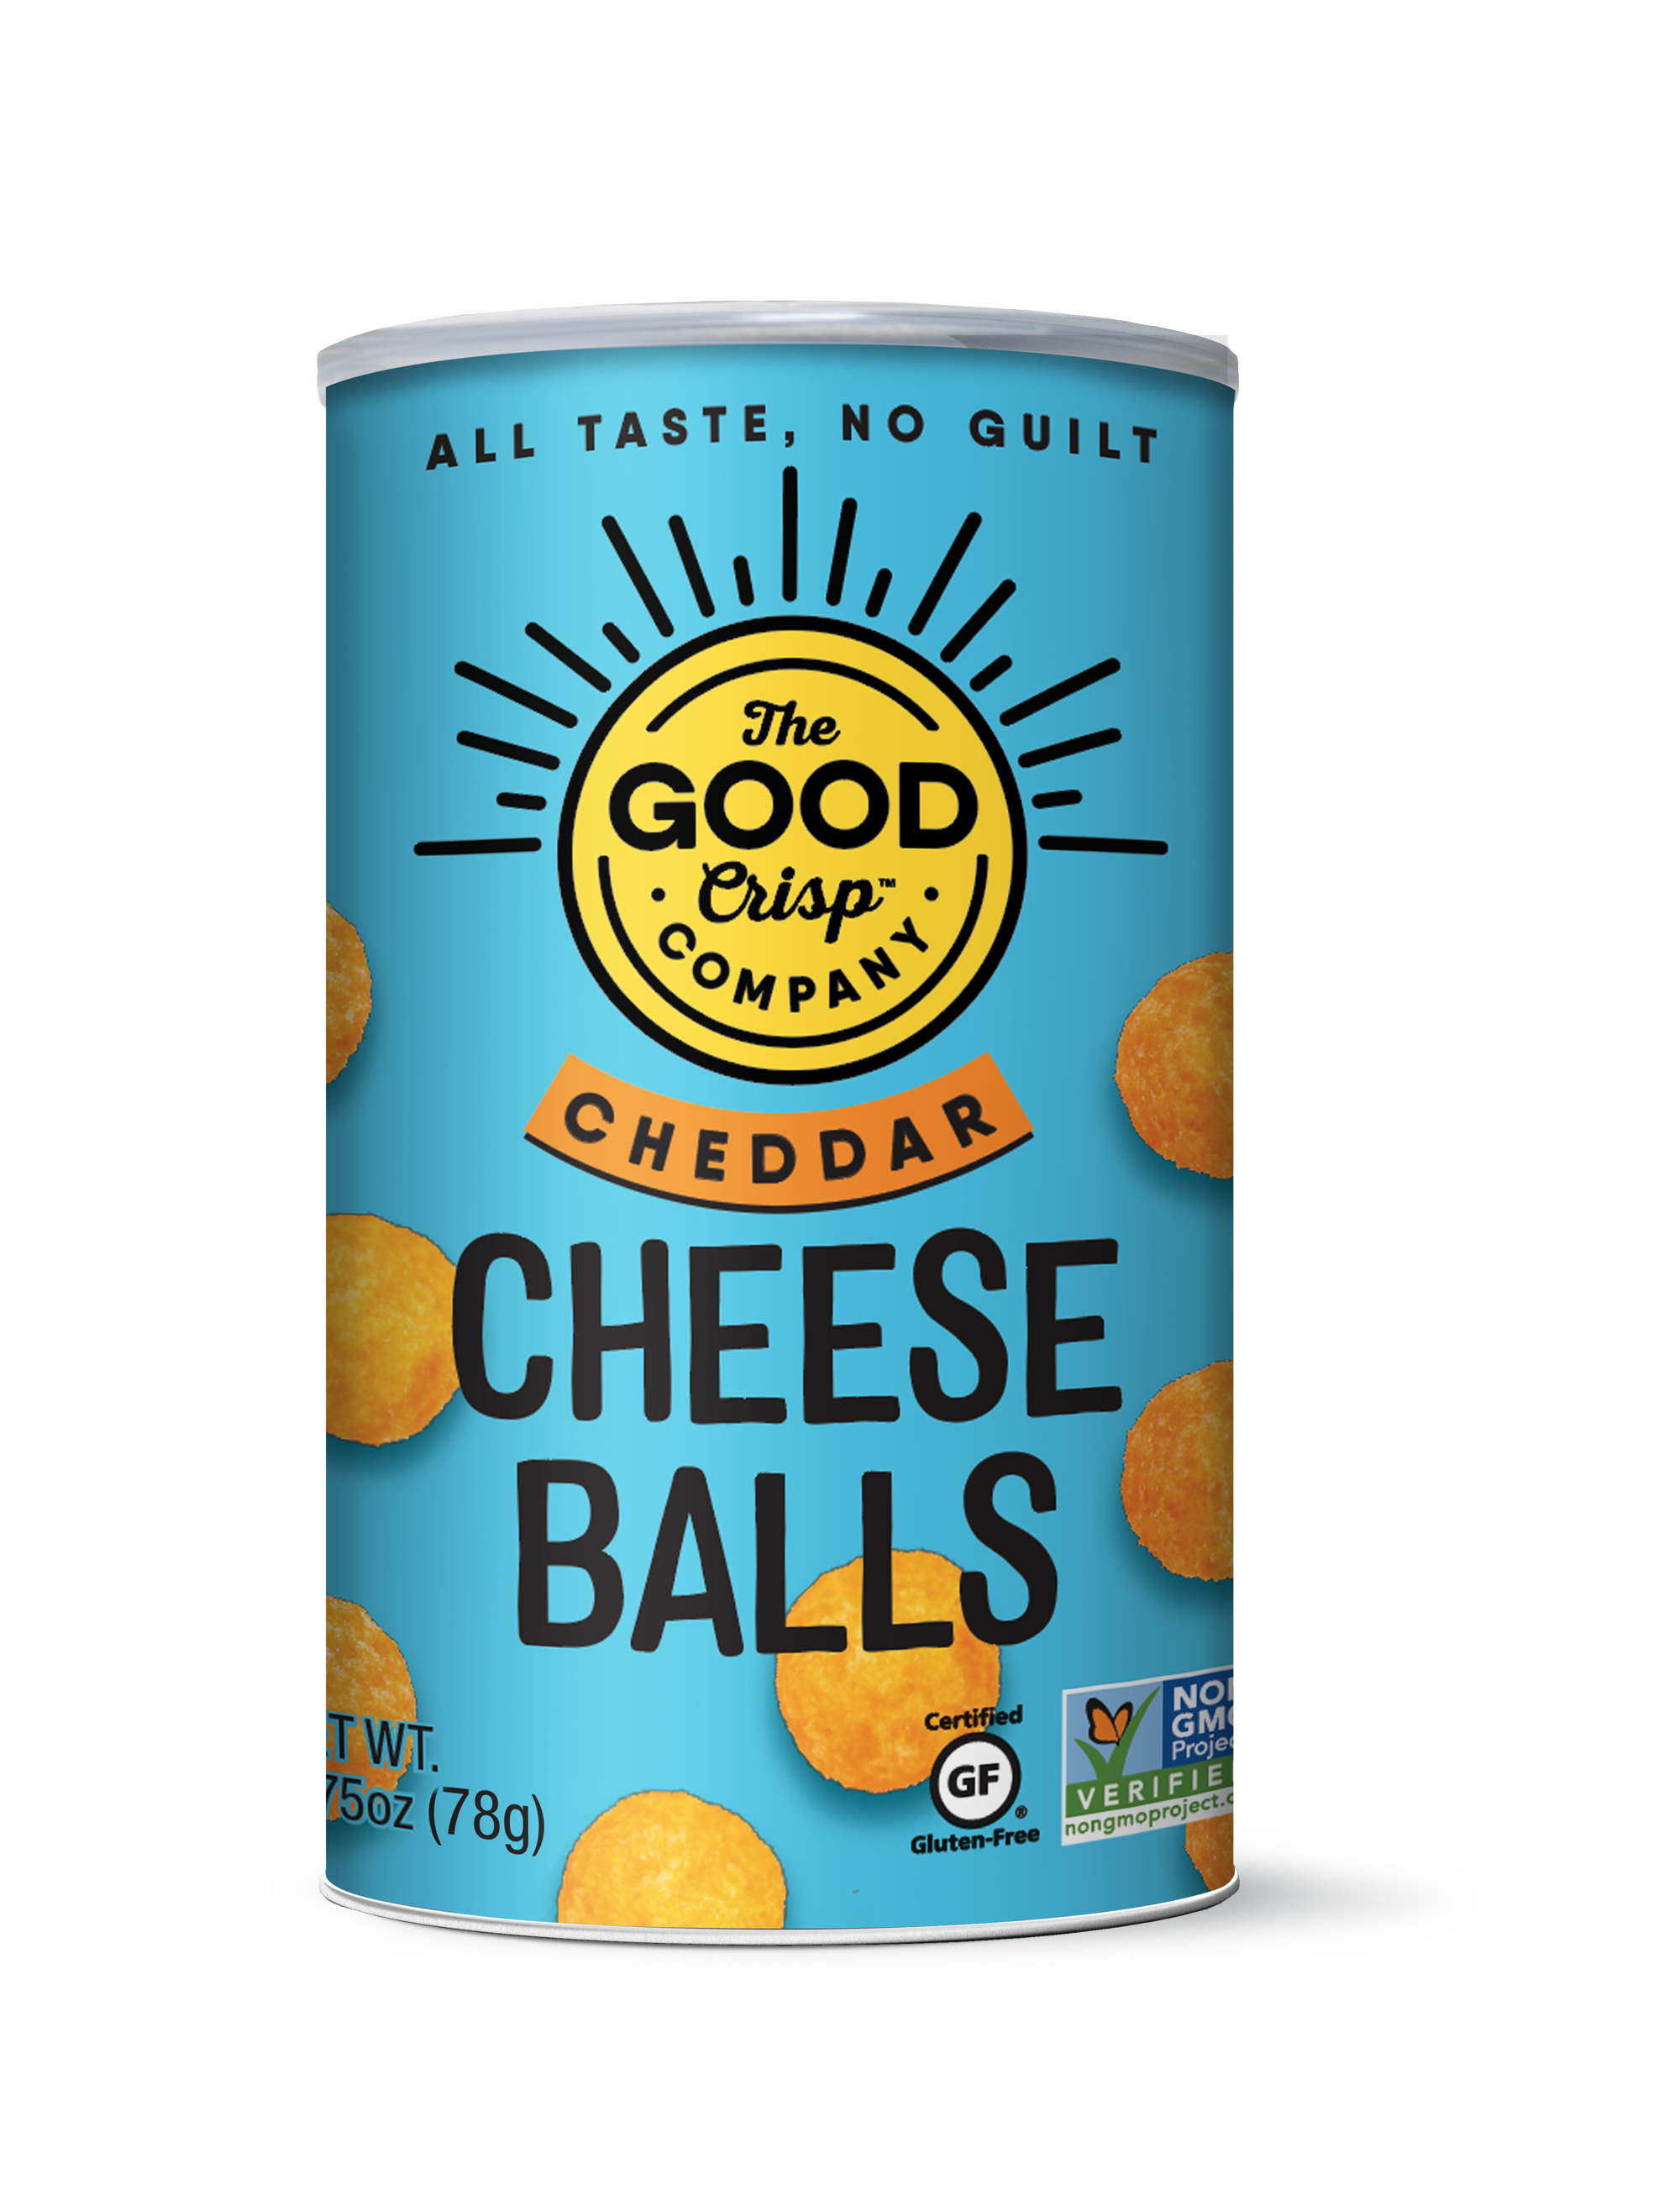 The Good Crisp Company Cheddar Cheese Balls